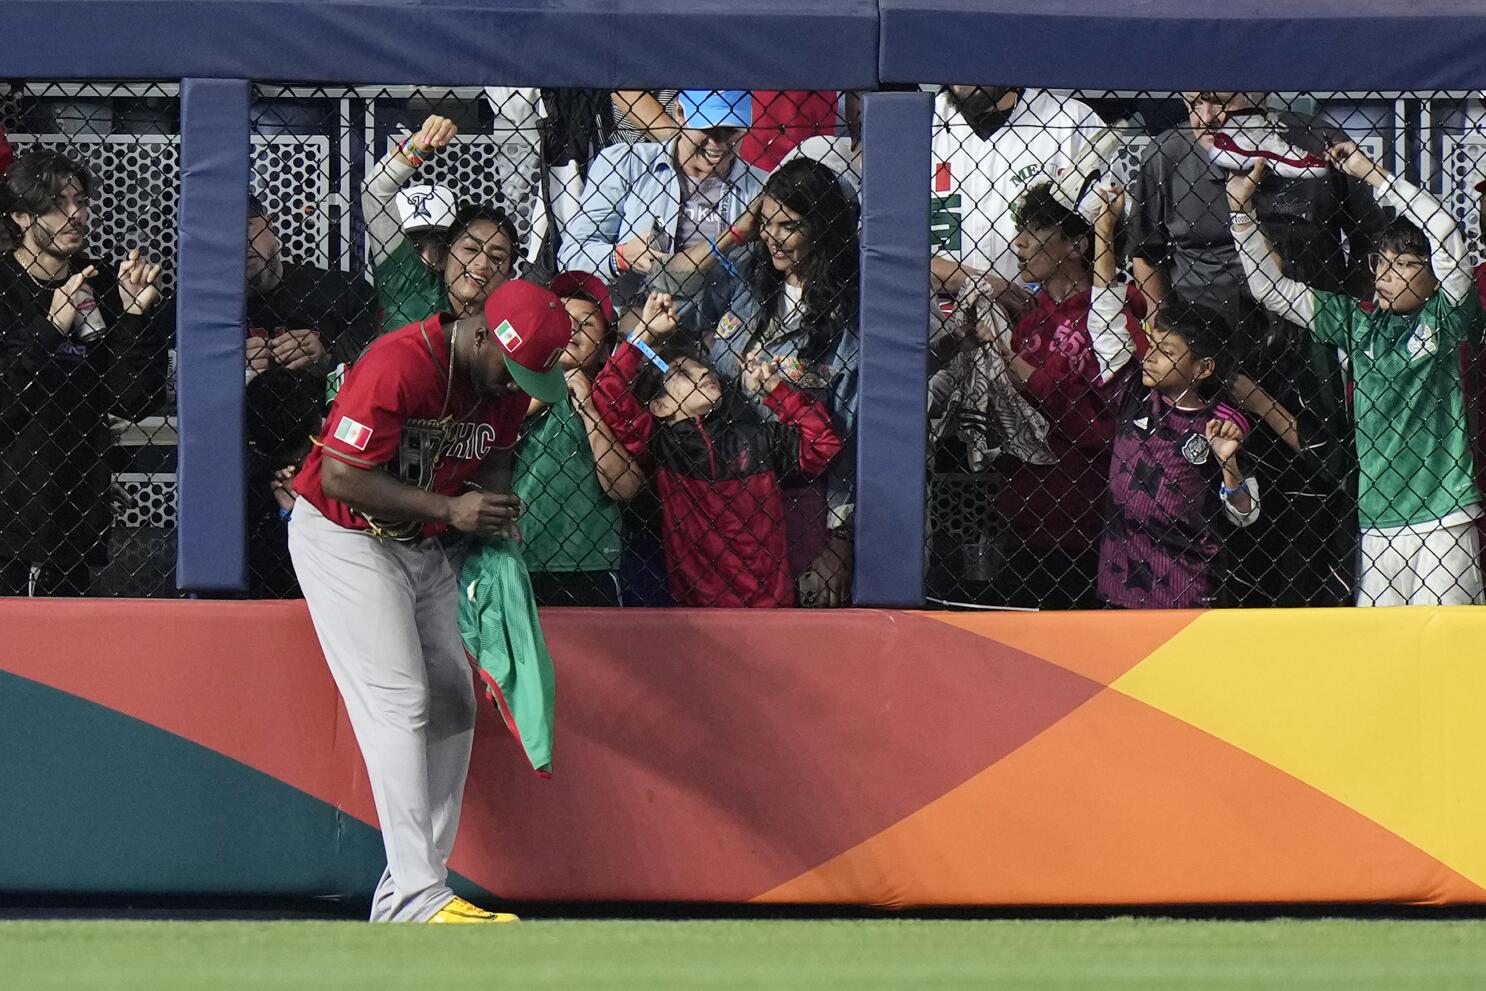 WATCH: Rays' Randy Arozarena Robs Home Run, Preserves Mexico Lead